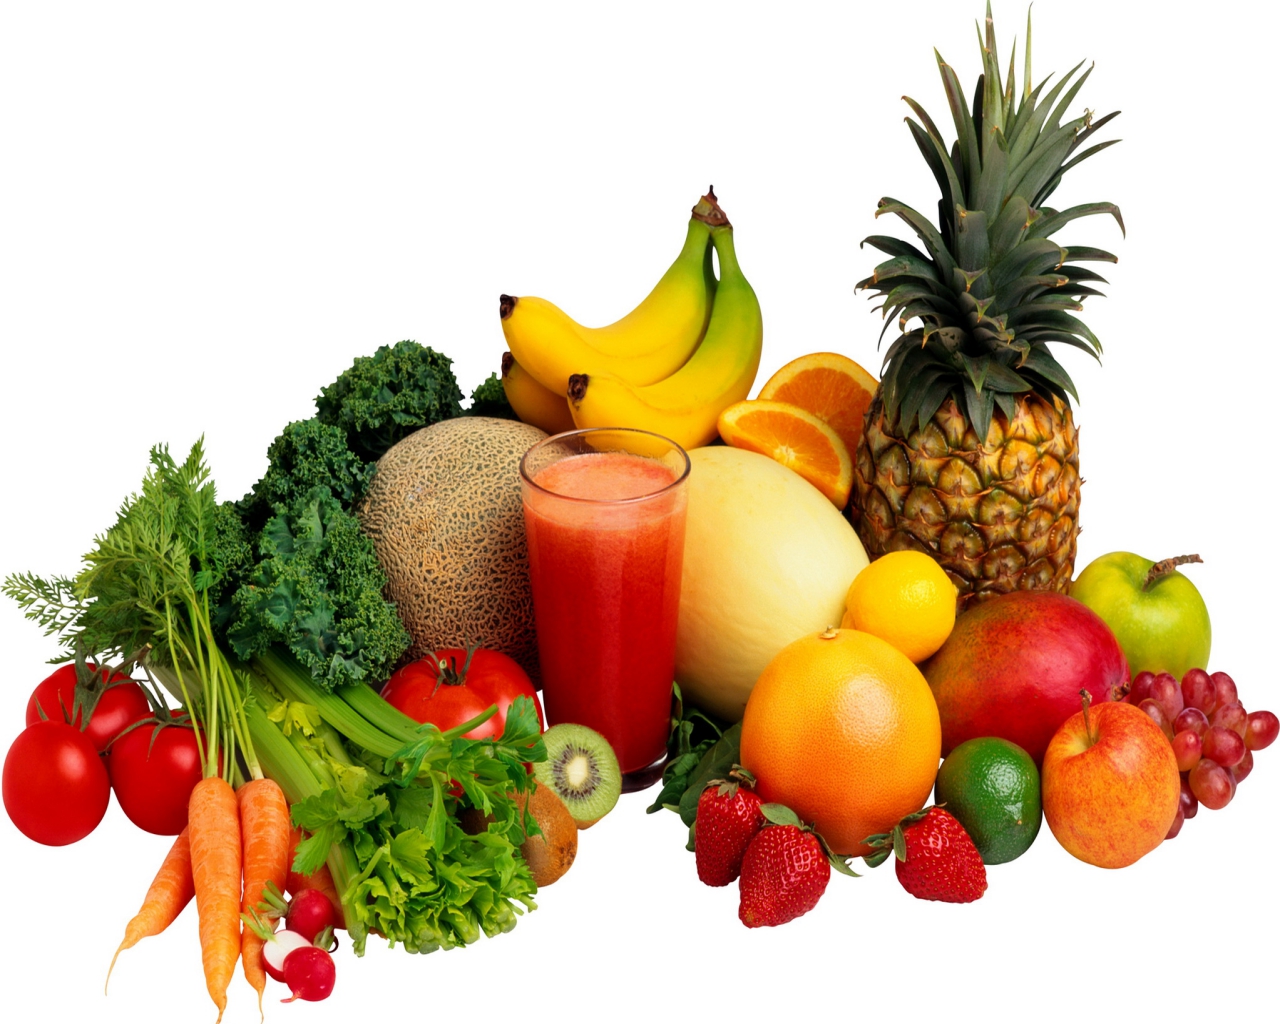 Fruits & Vegetables Backgrounds, Compatible - PC, Mobile, Gadgets| 1280x1024 px